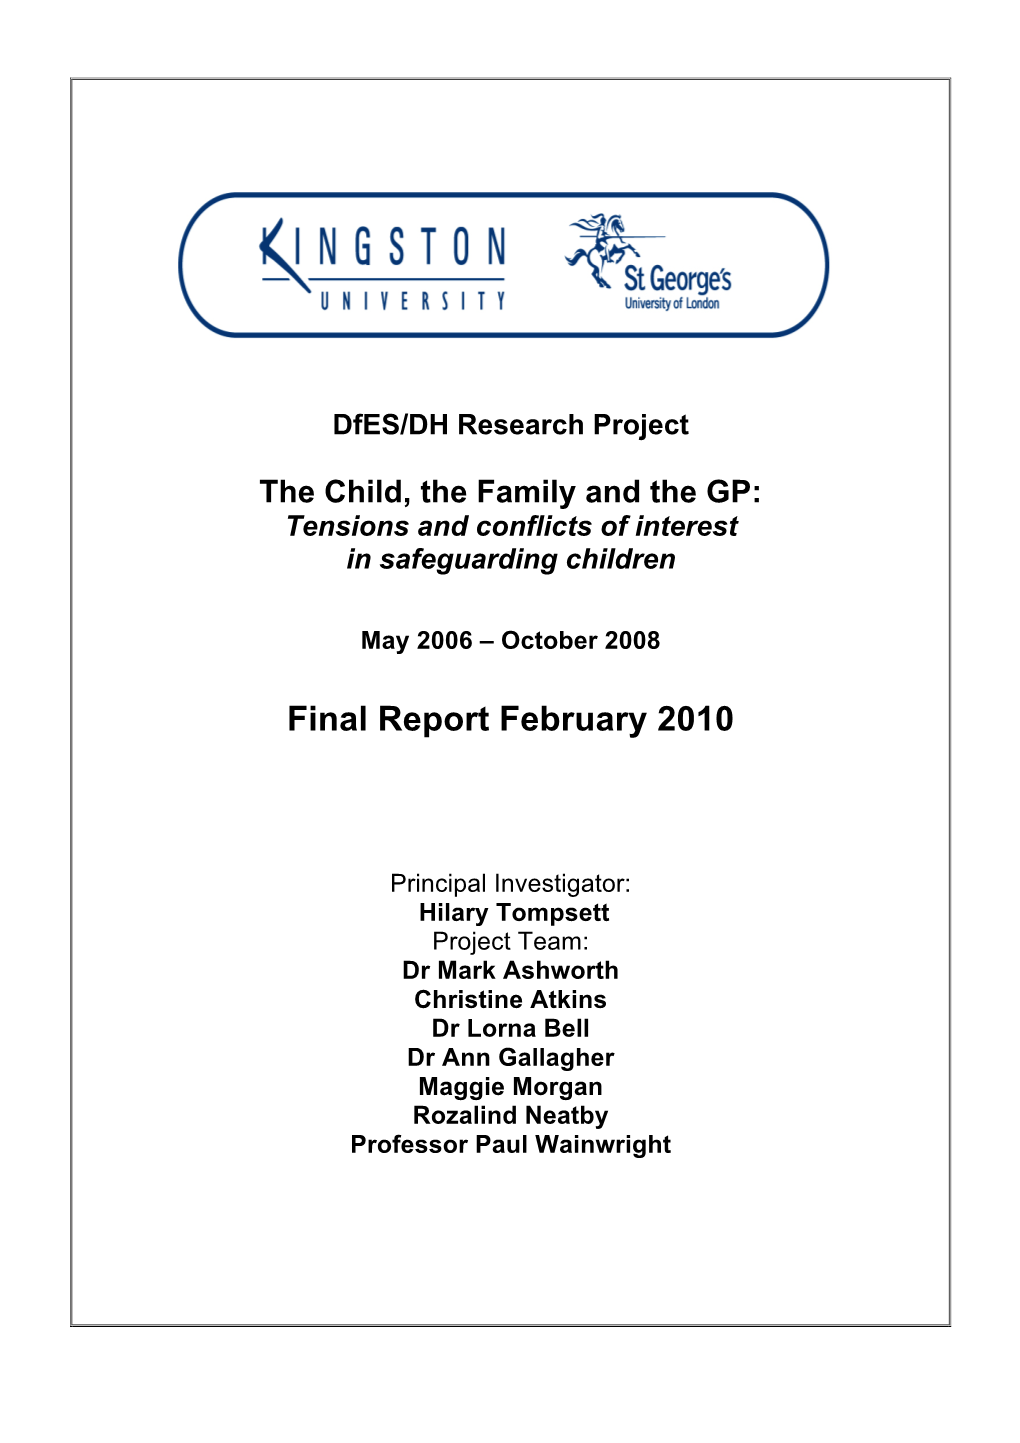 Final Report February 2010